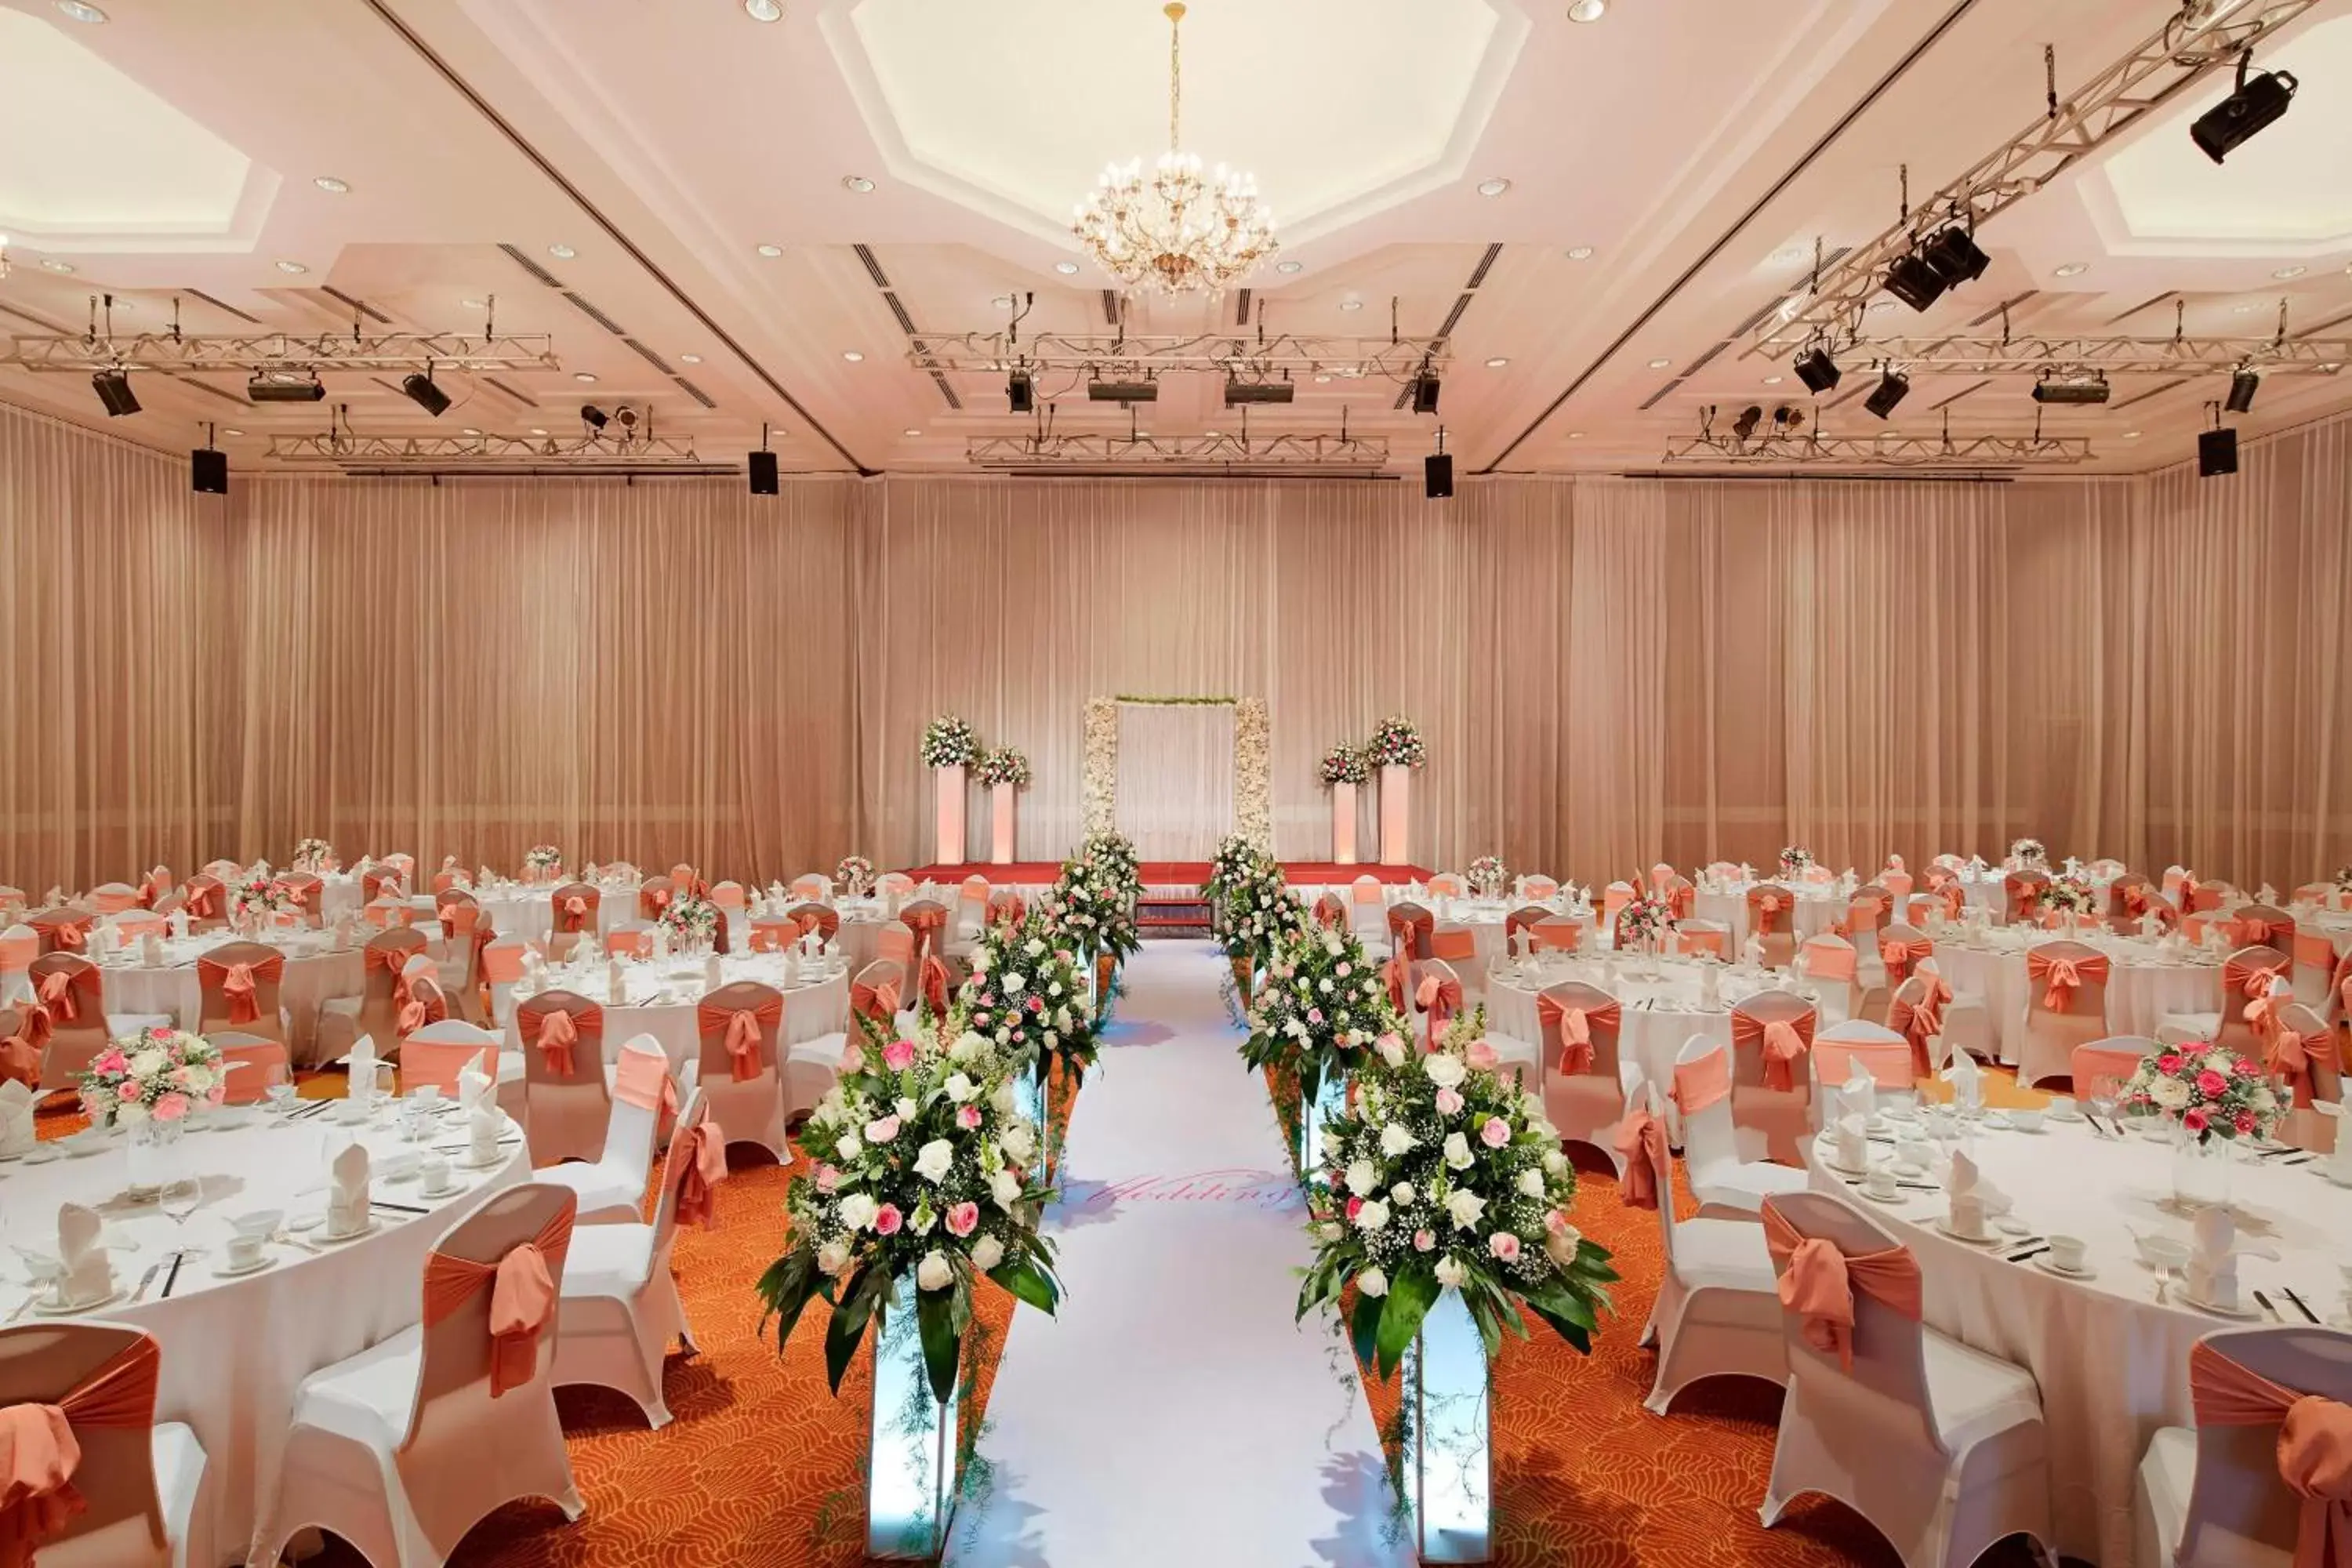 Banquet/Function facilities, Banquet Facilities in Sheraton Hanoi Hotel